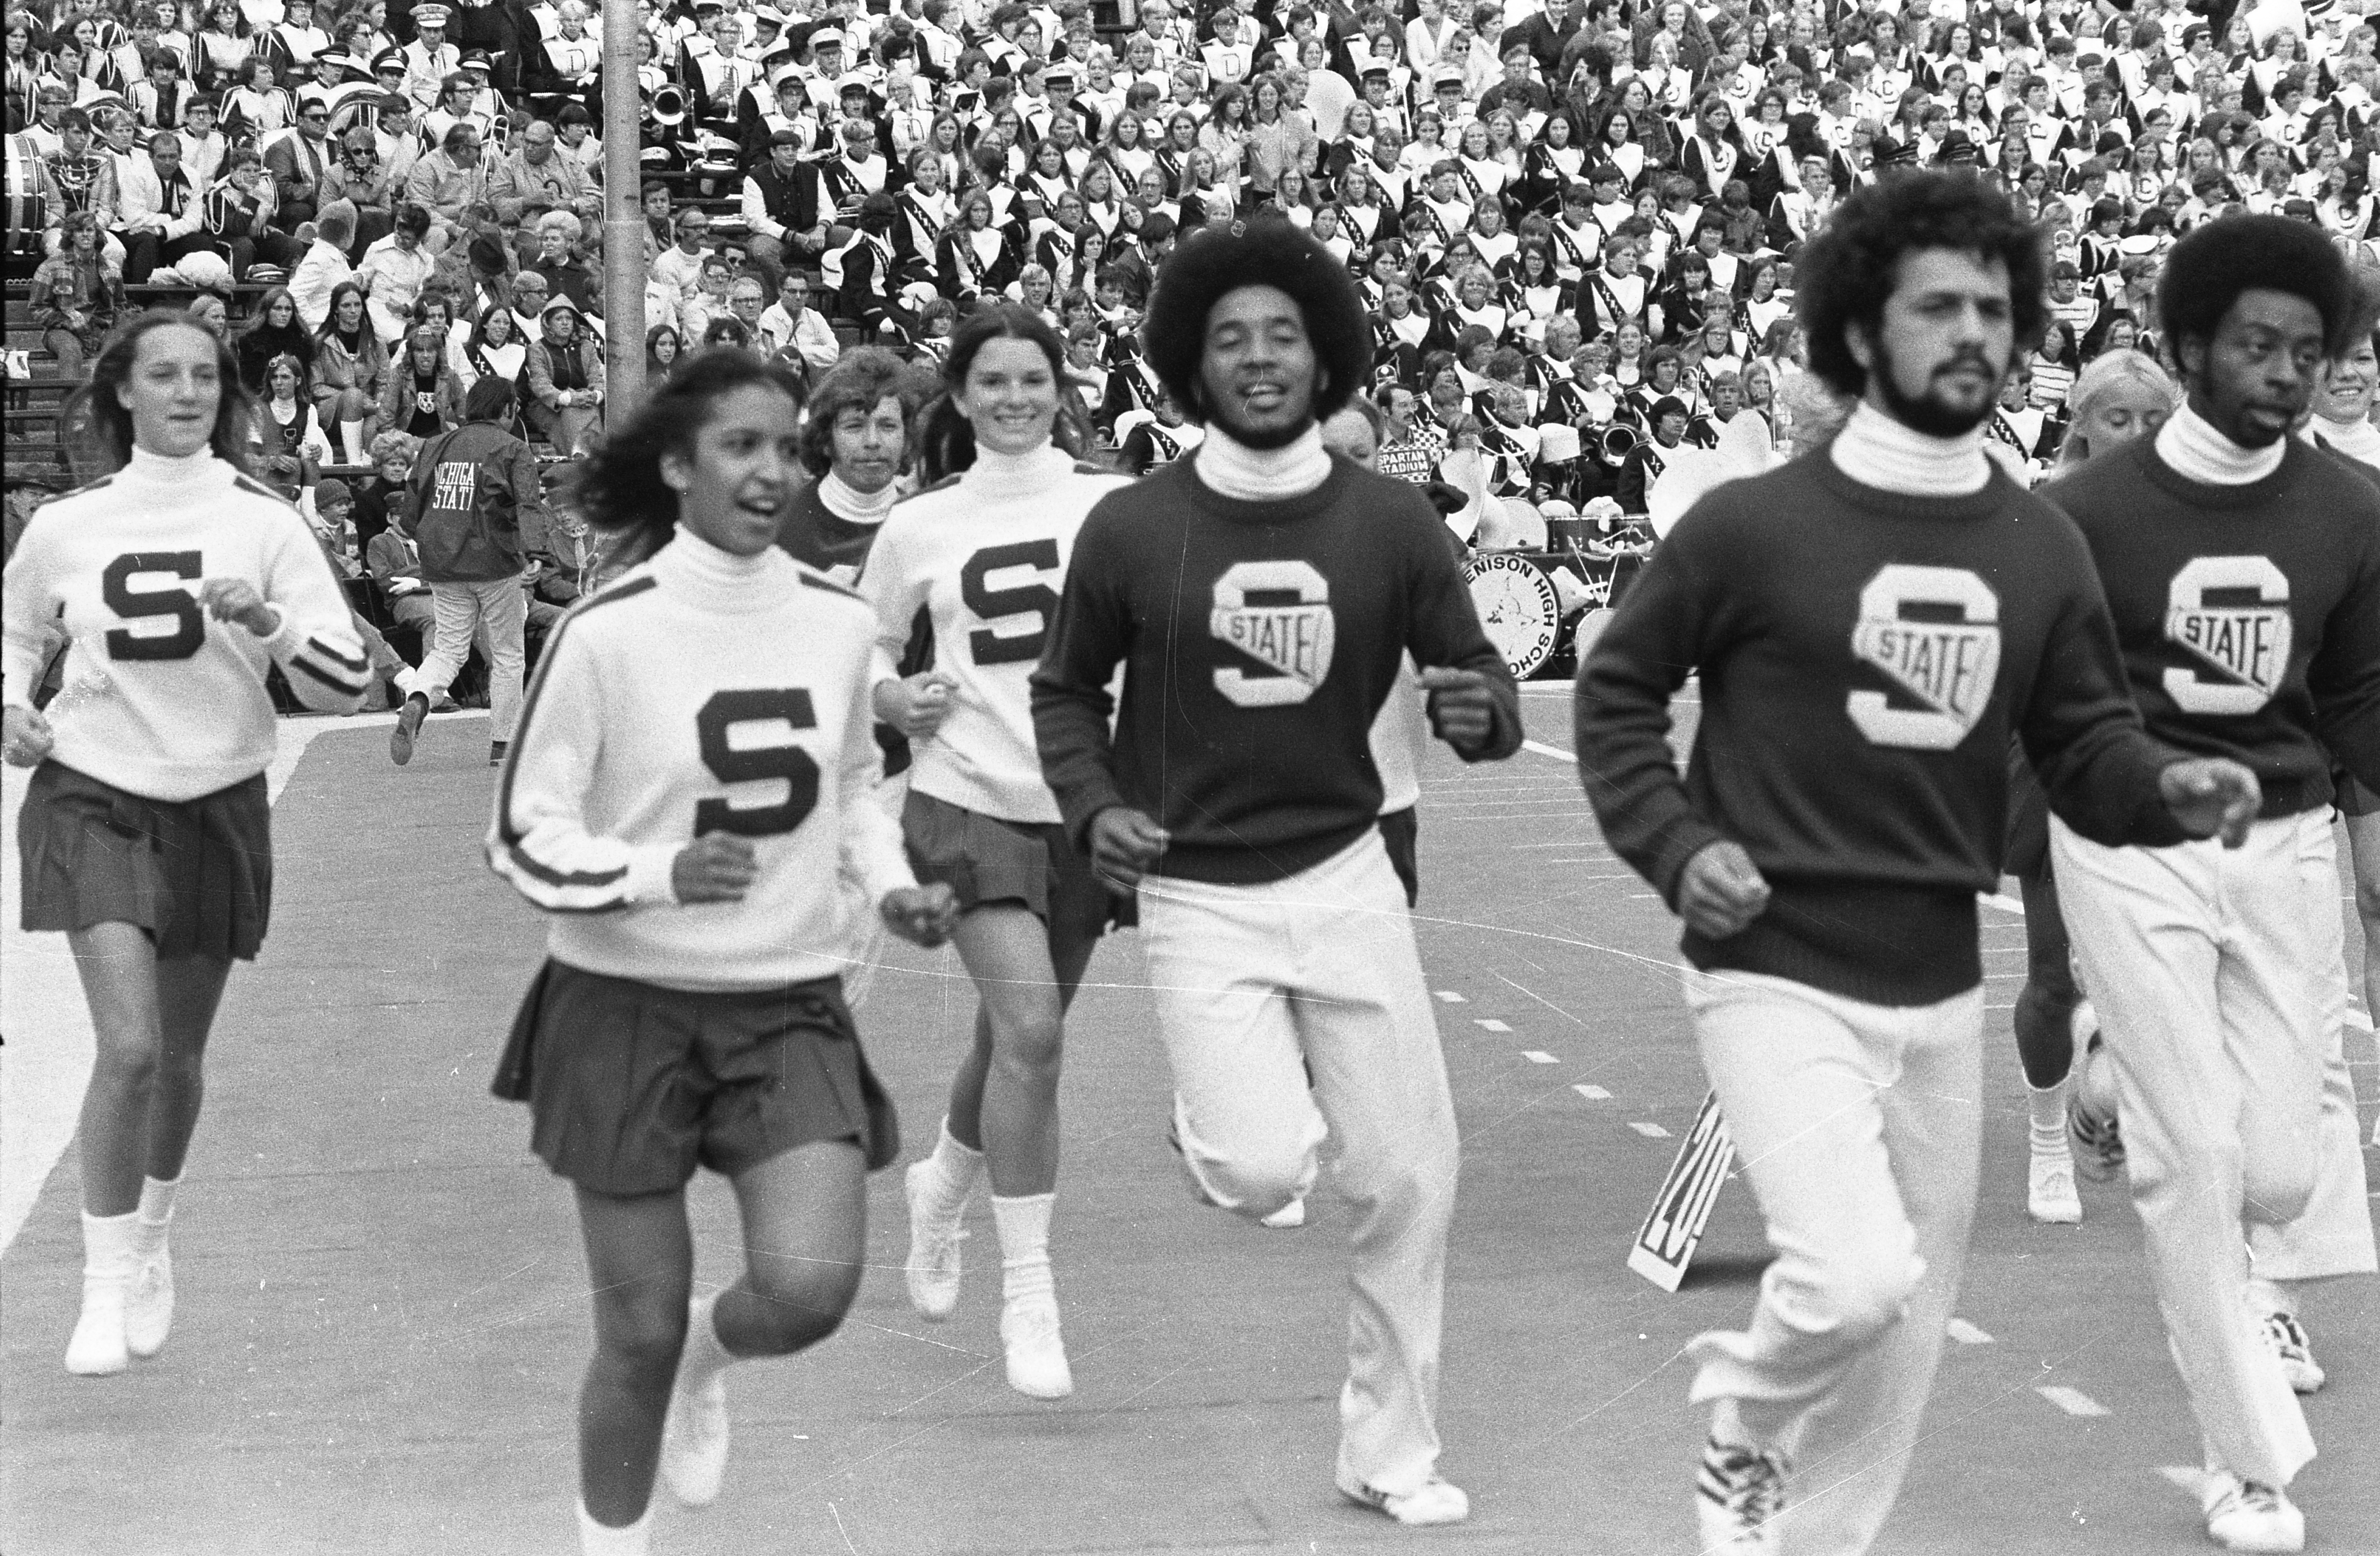 Cheerleaders at the MSU vs Georgia Tech football game, 1972